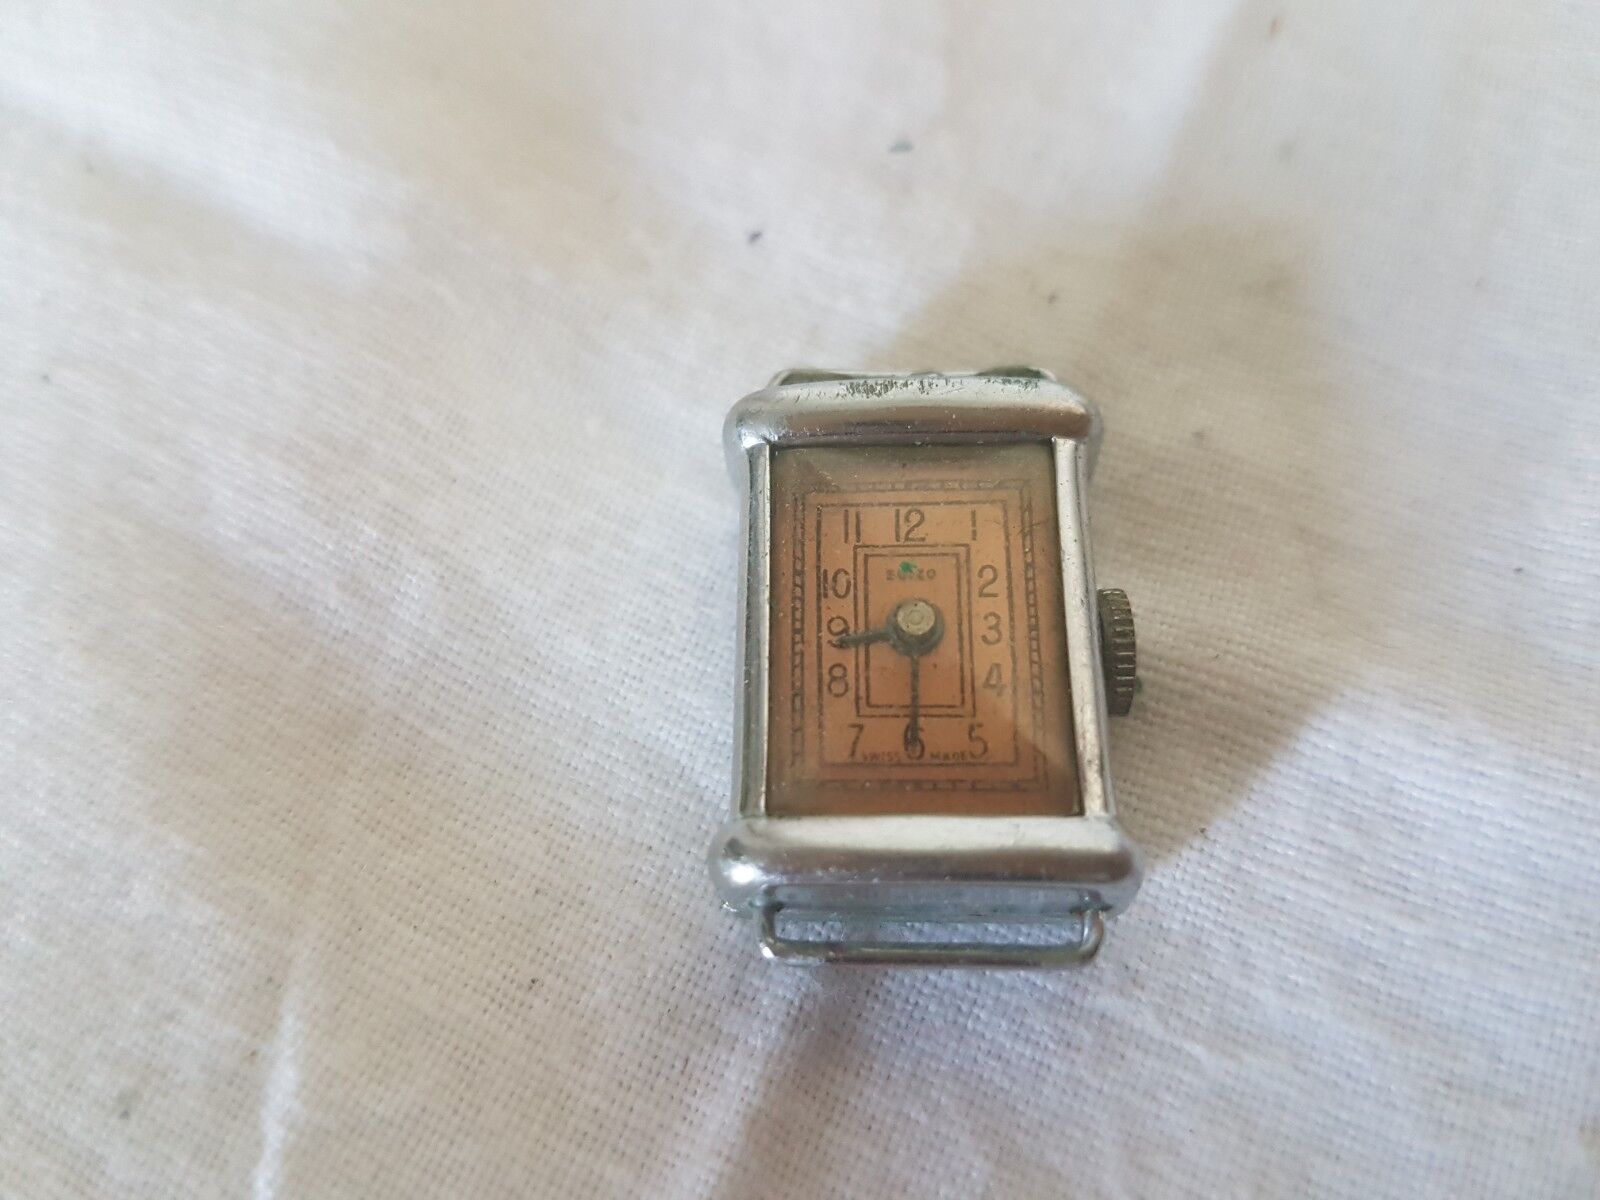 From a resolution: Beautiful SUIZO Swiss Made Wristwatch